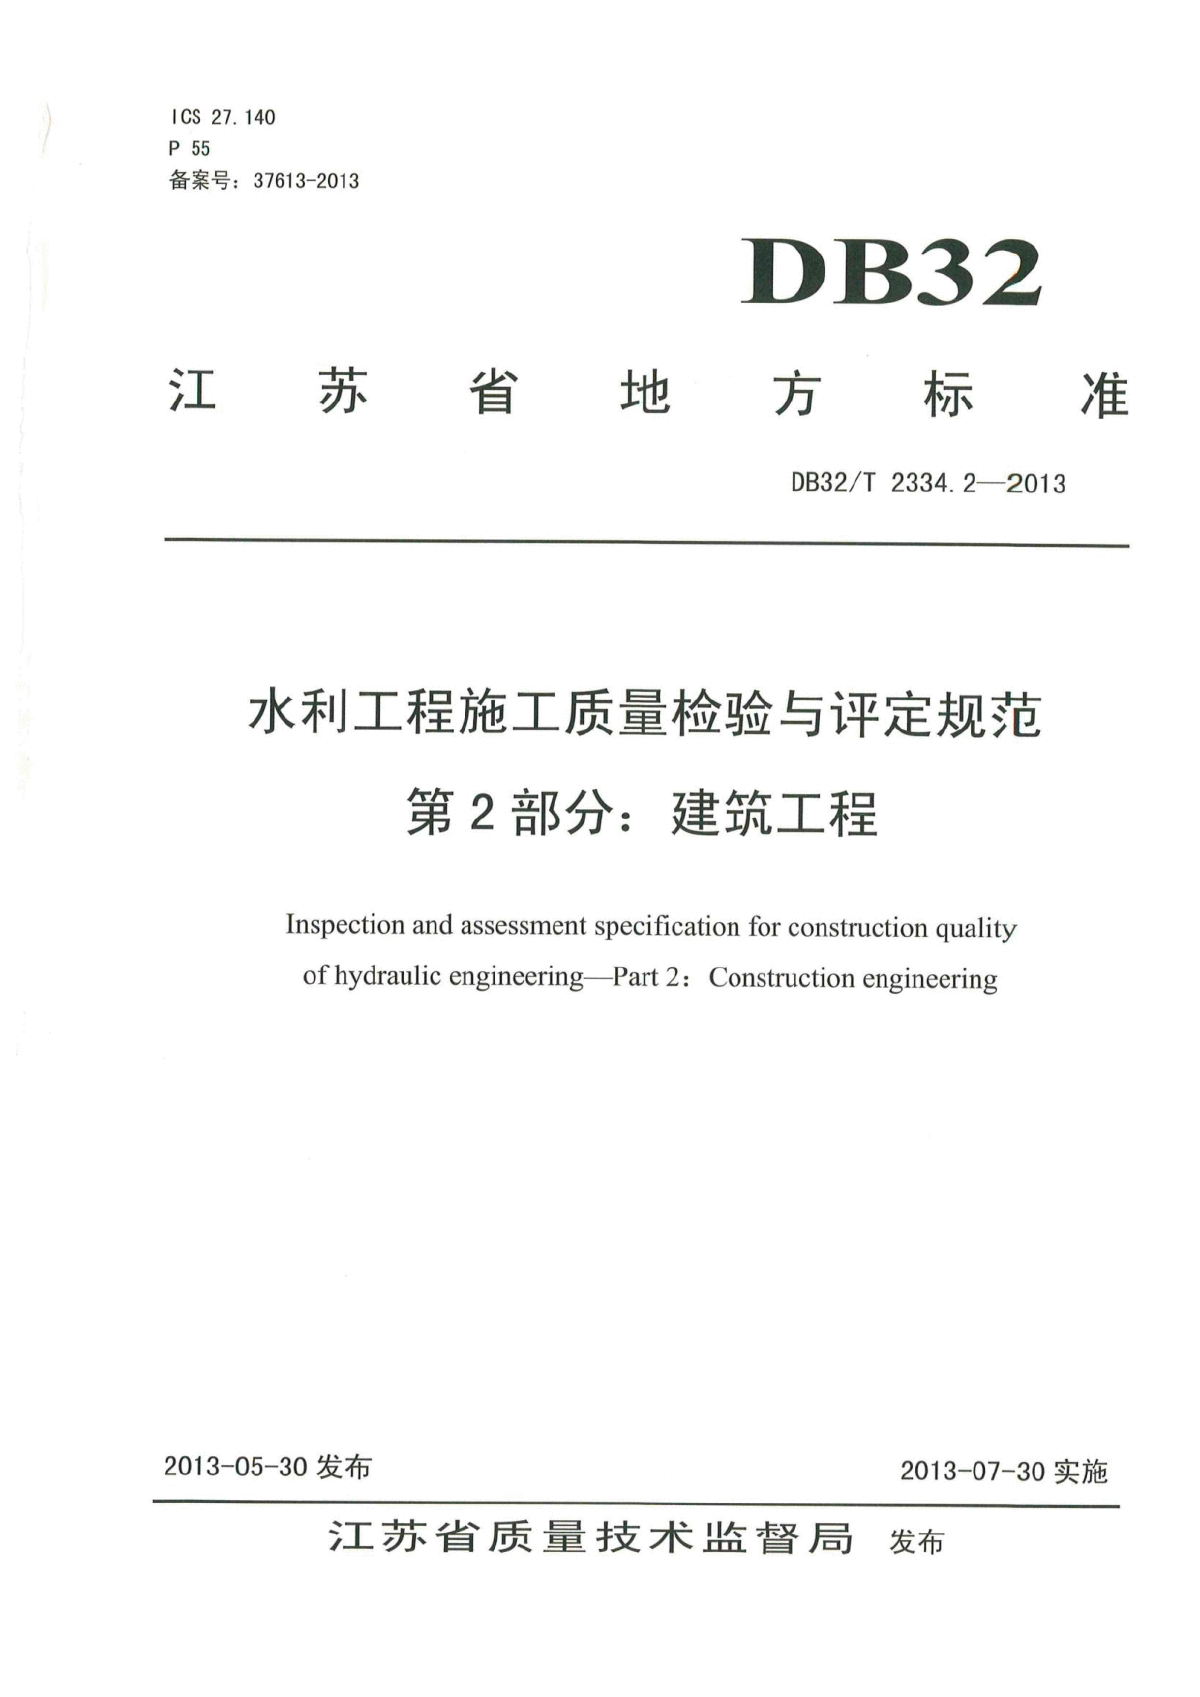 DB32T23342-2013水利工程施工质量检验与评定规范第2部分建筑工程